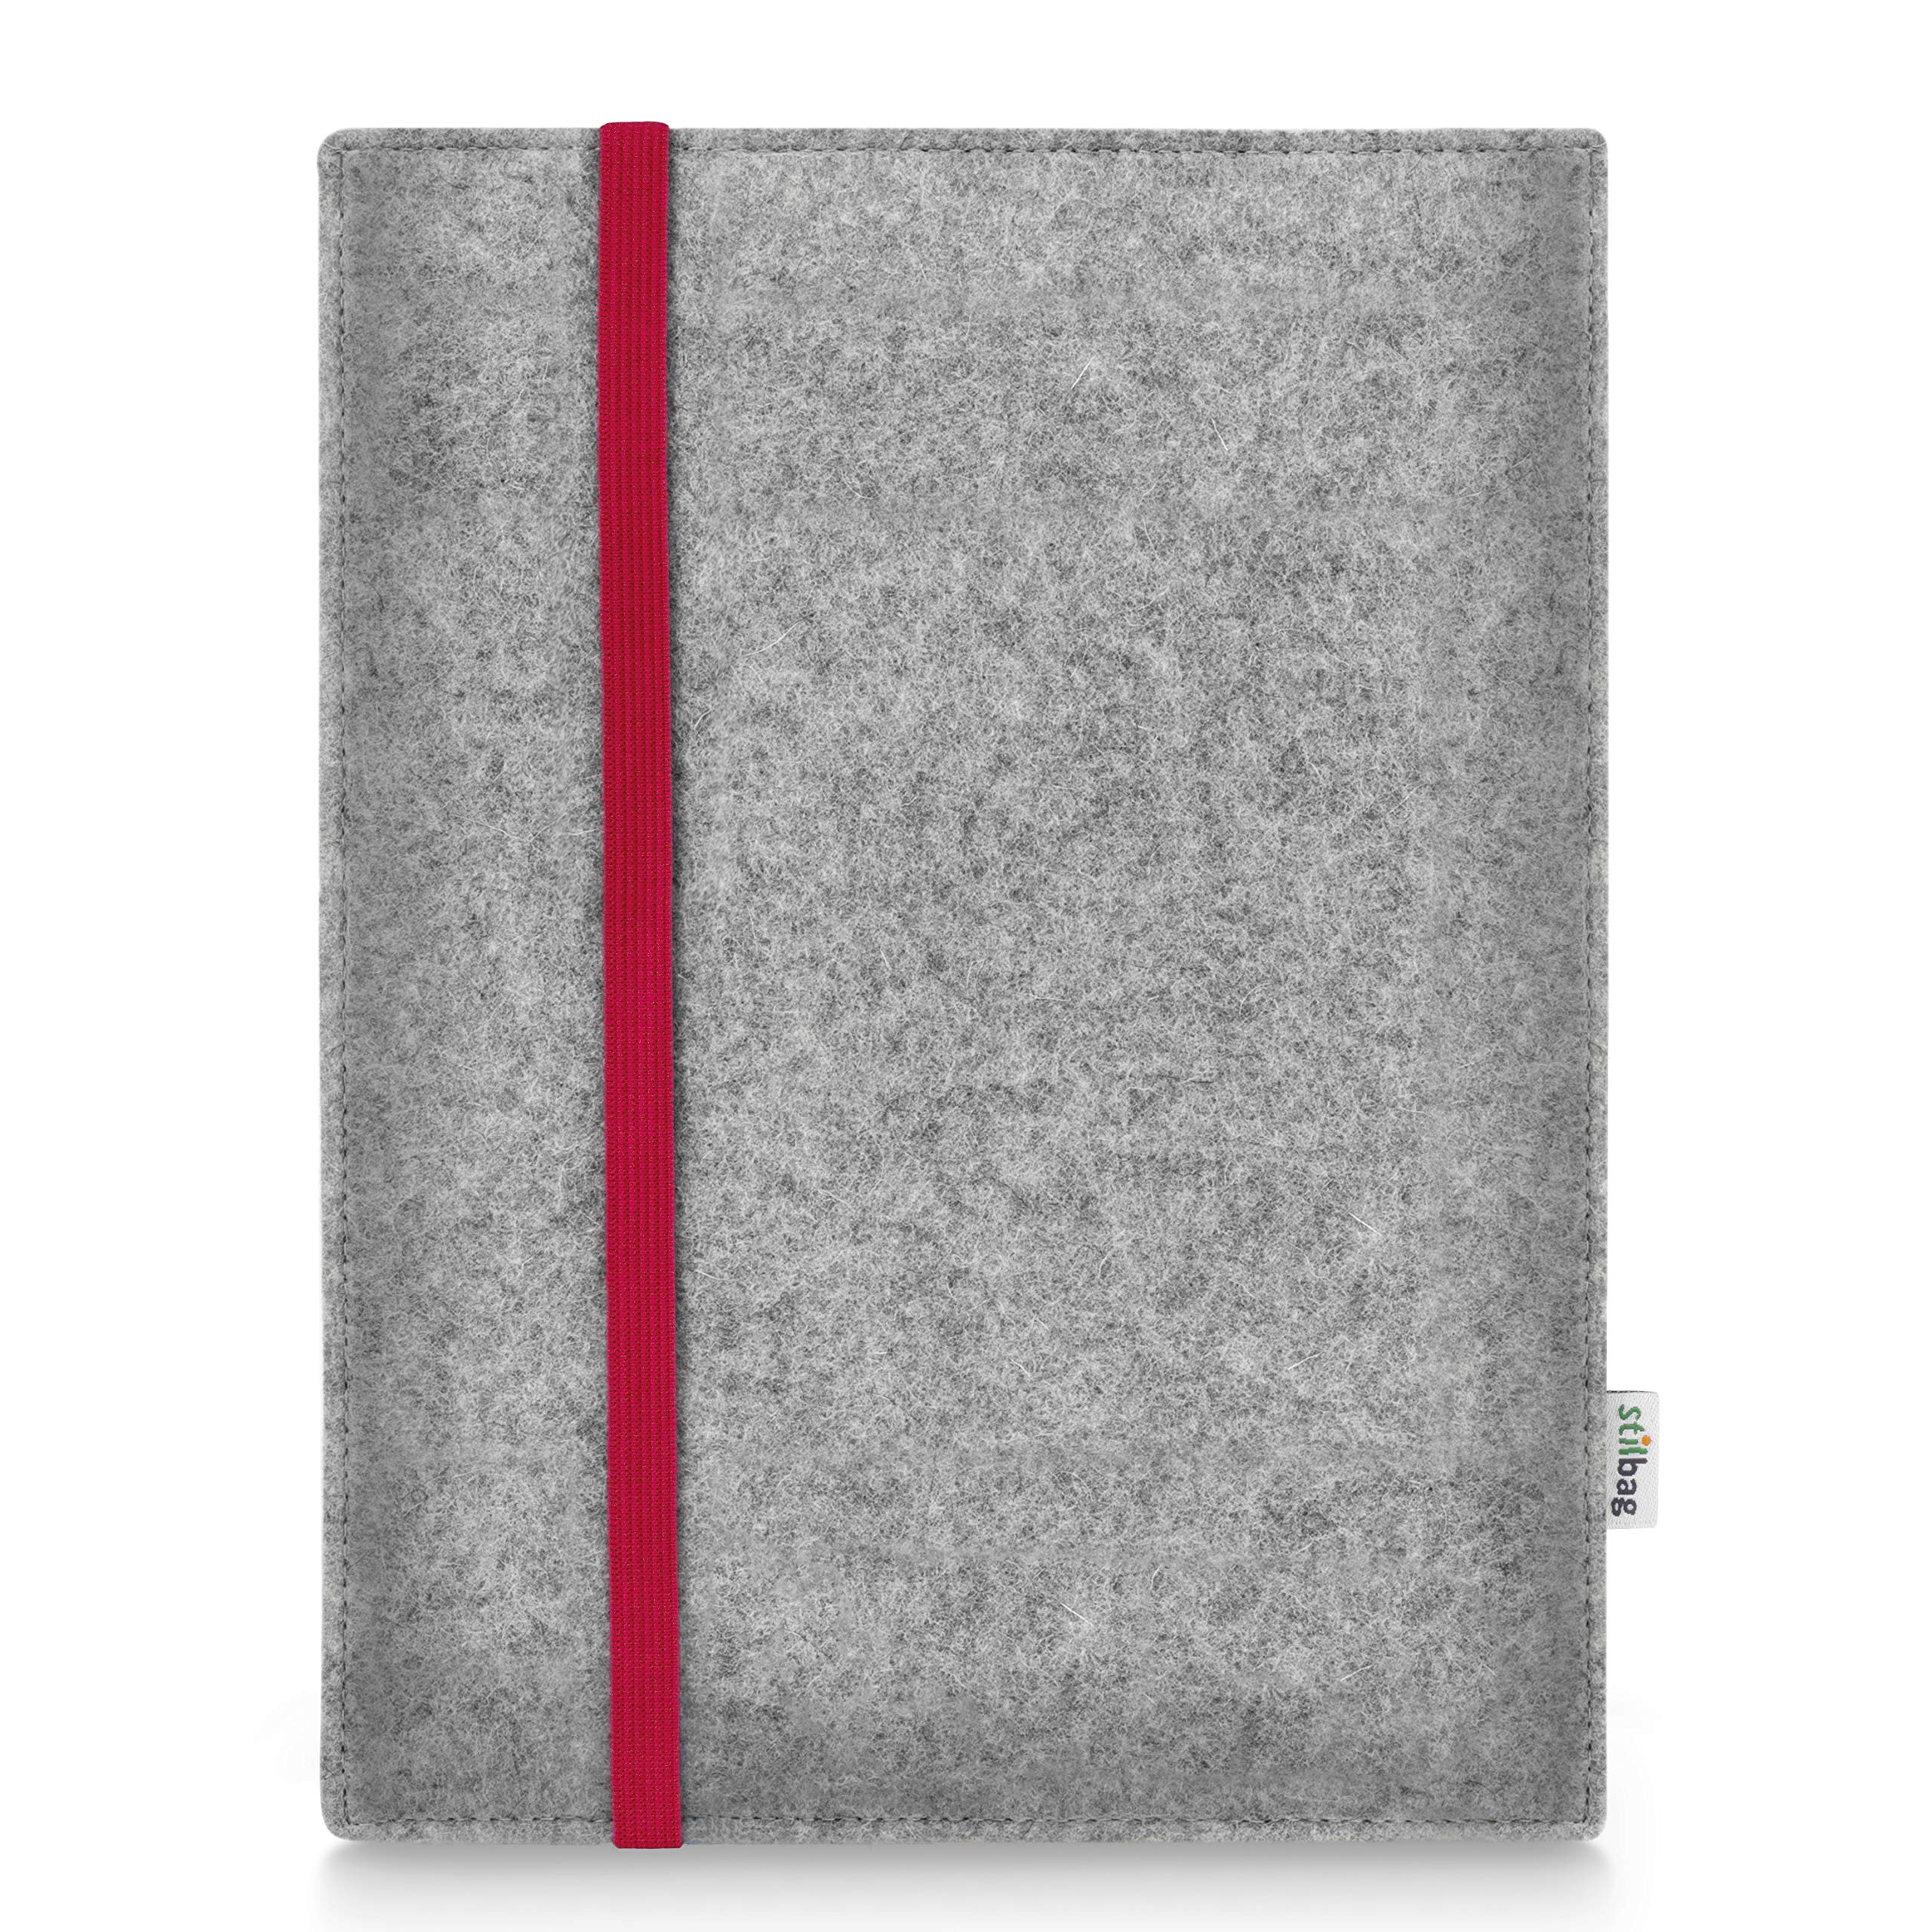 Stilbag Hülle für Apple iPad (2018) | Etui Case aus Merino Wollfilz | Modell Leon in hellgrau/rot | Tablet Schutz-Hülle Made in Germany